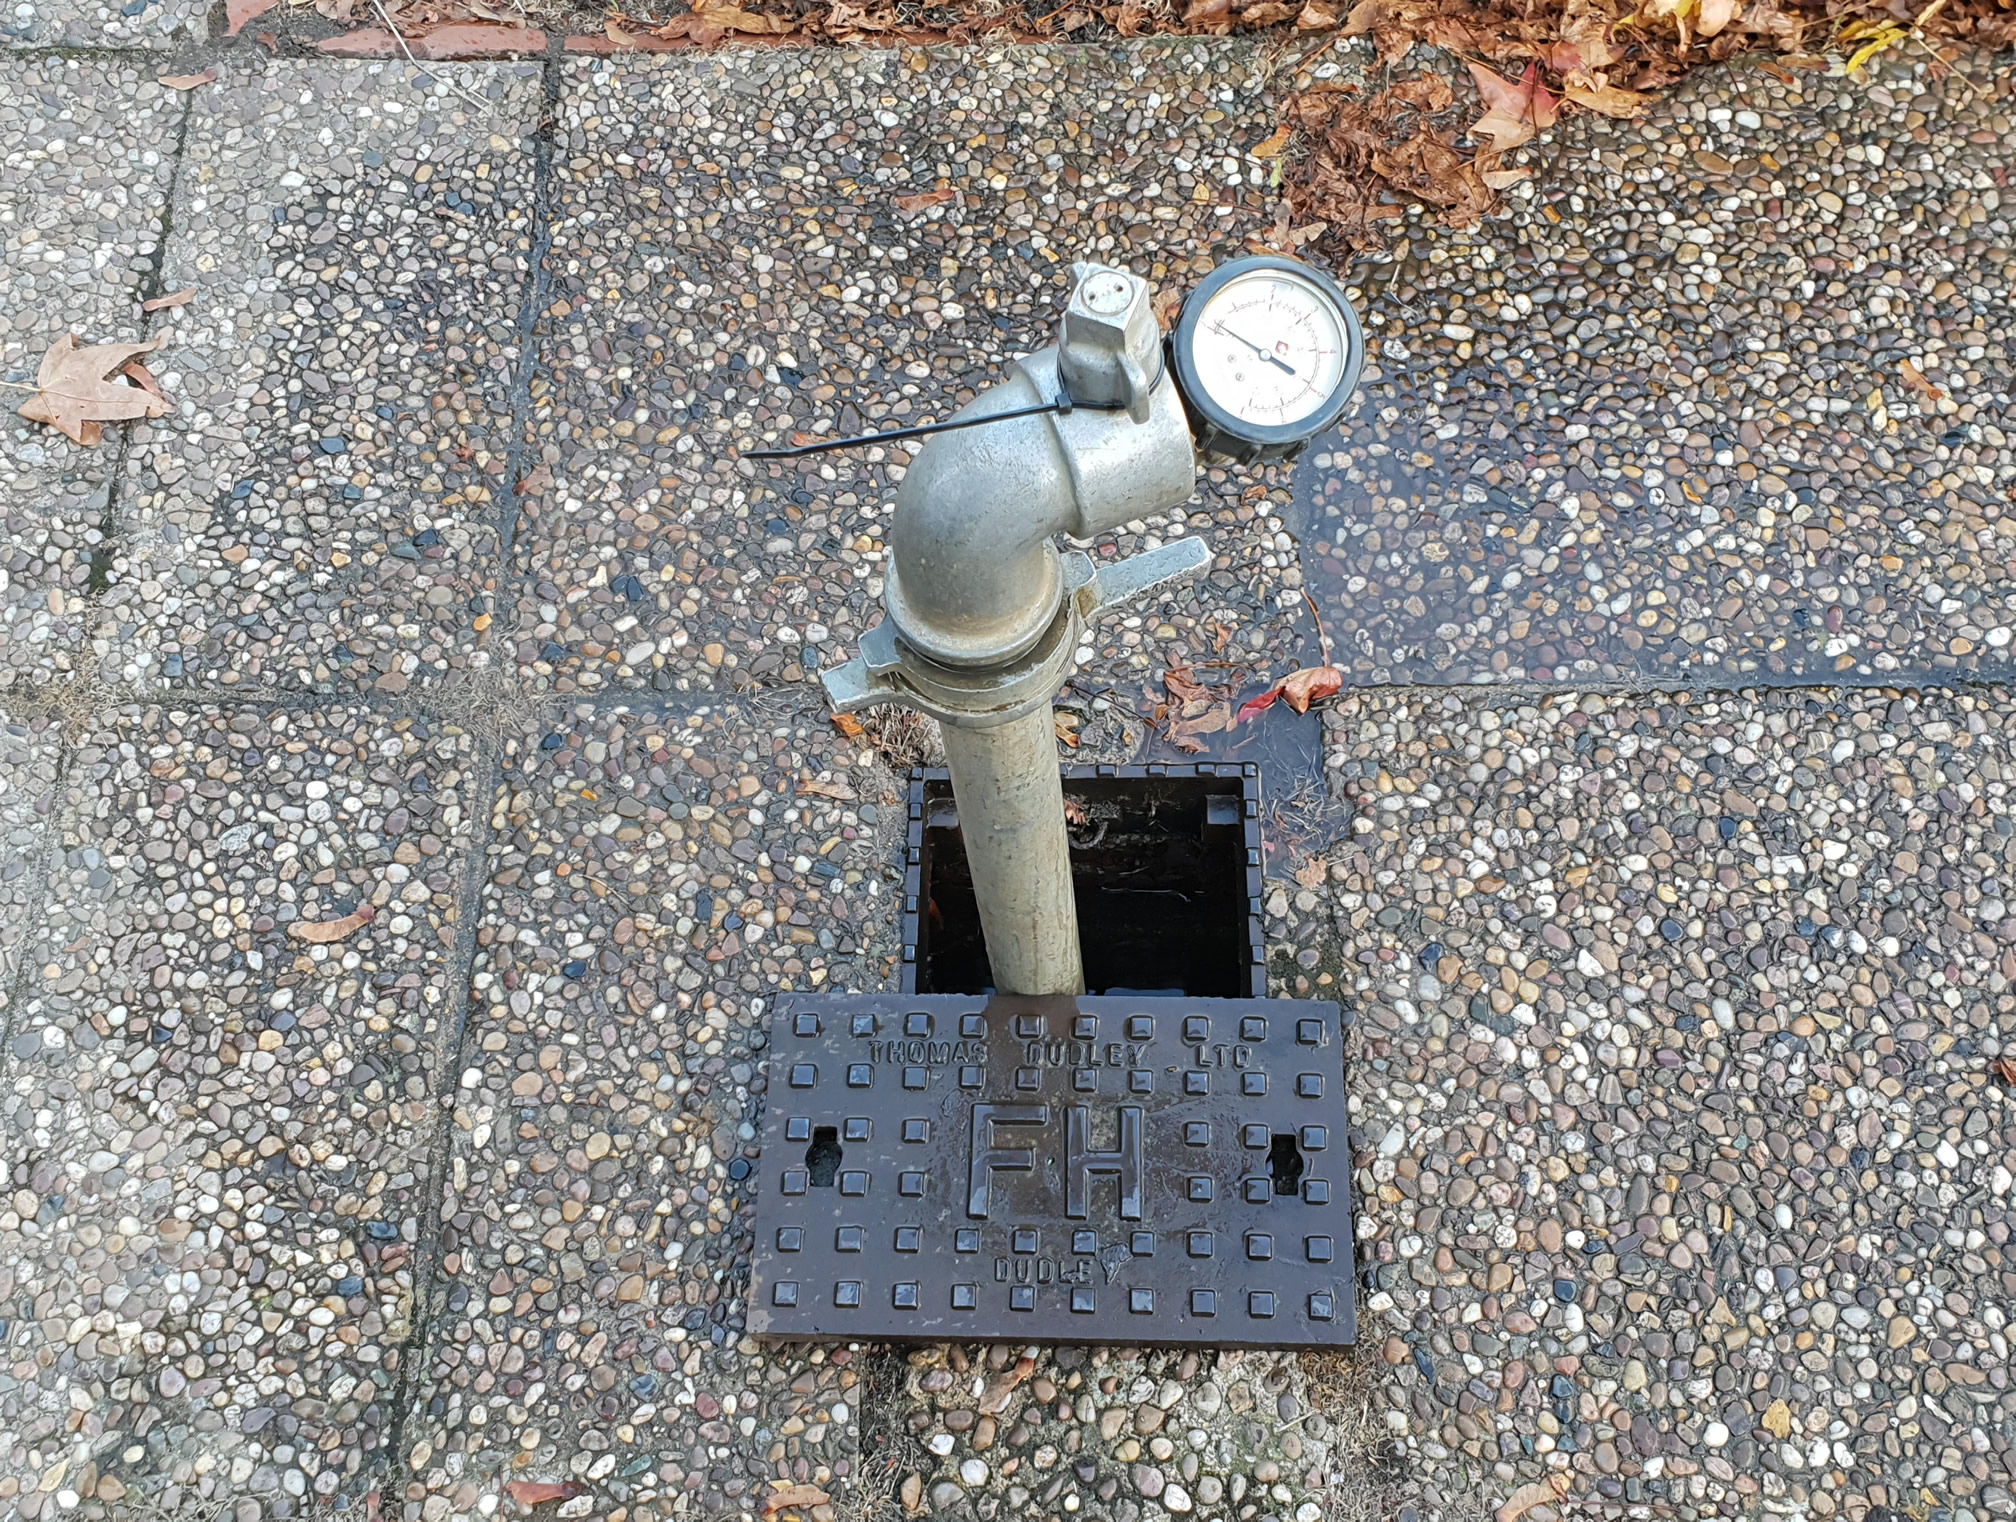 Fire Hydrant Testing Gettesting